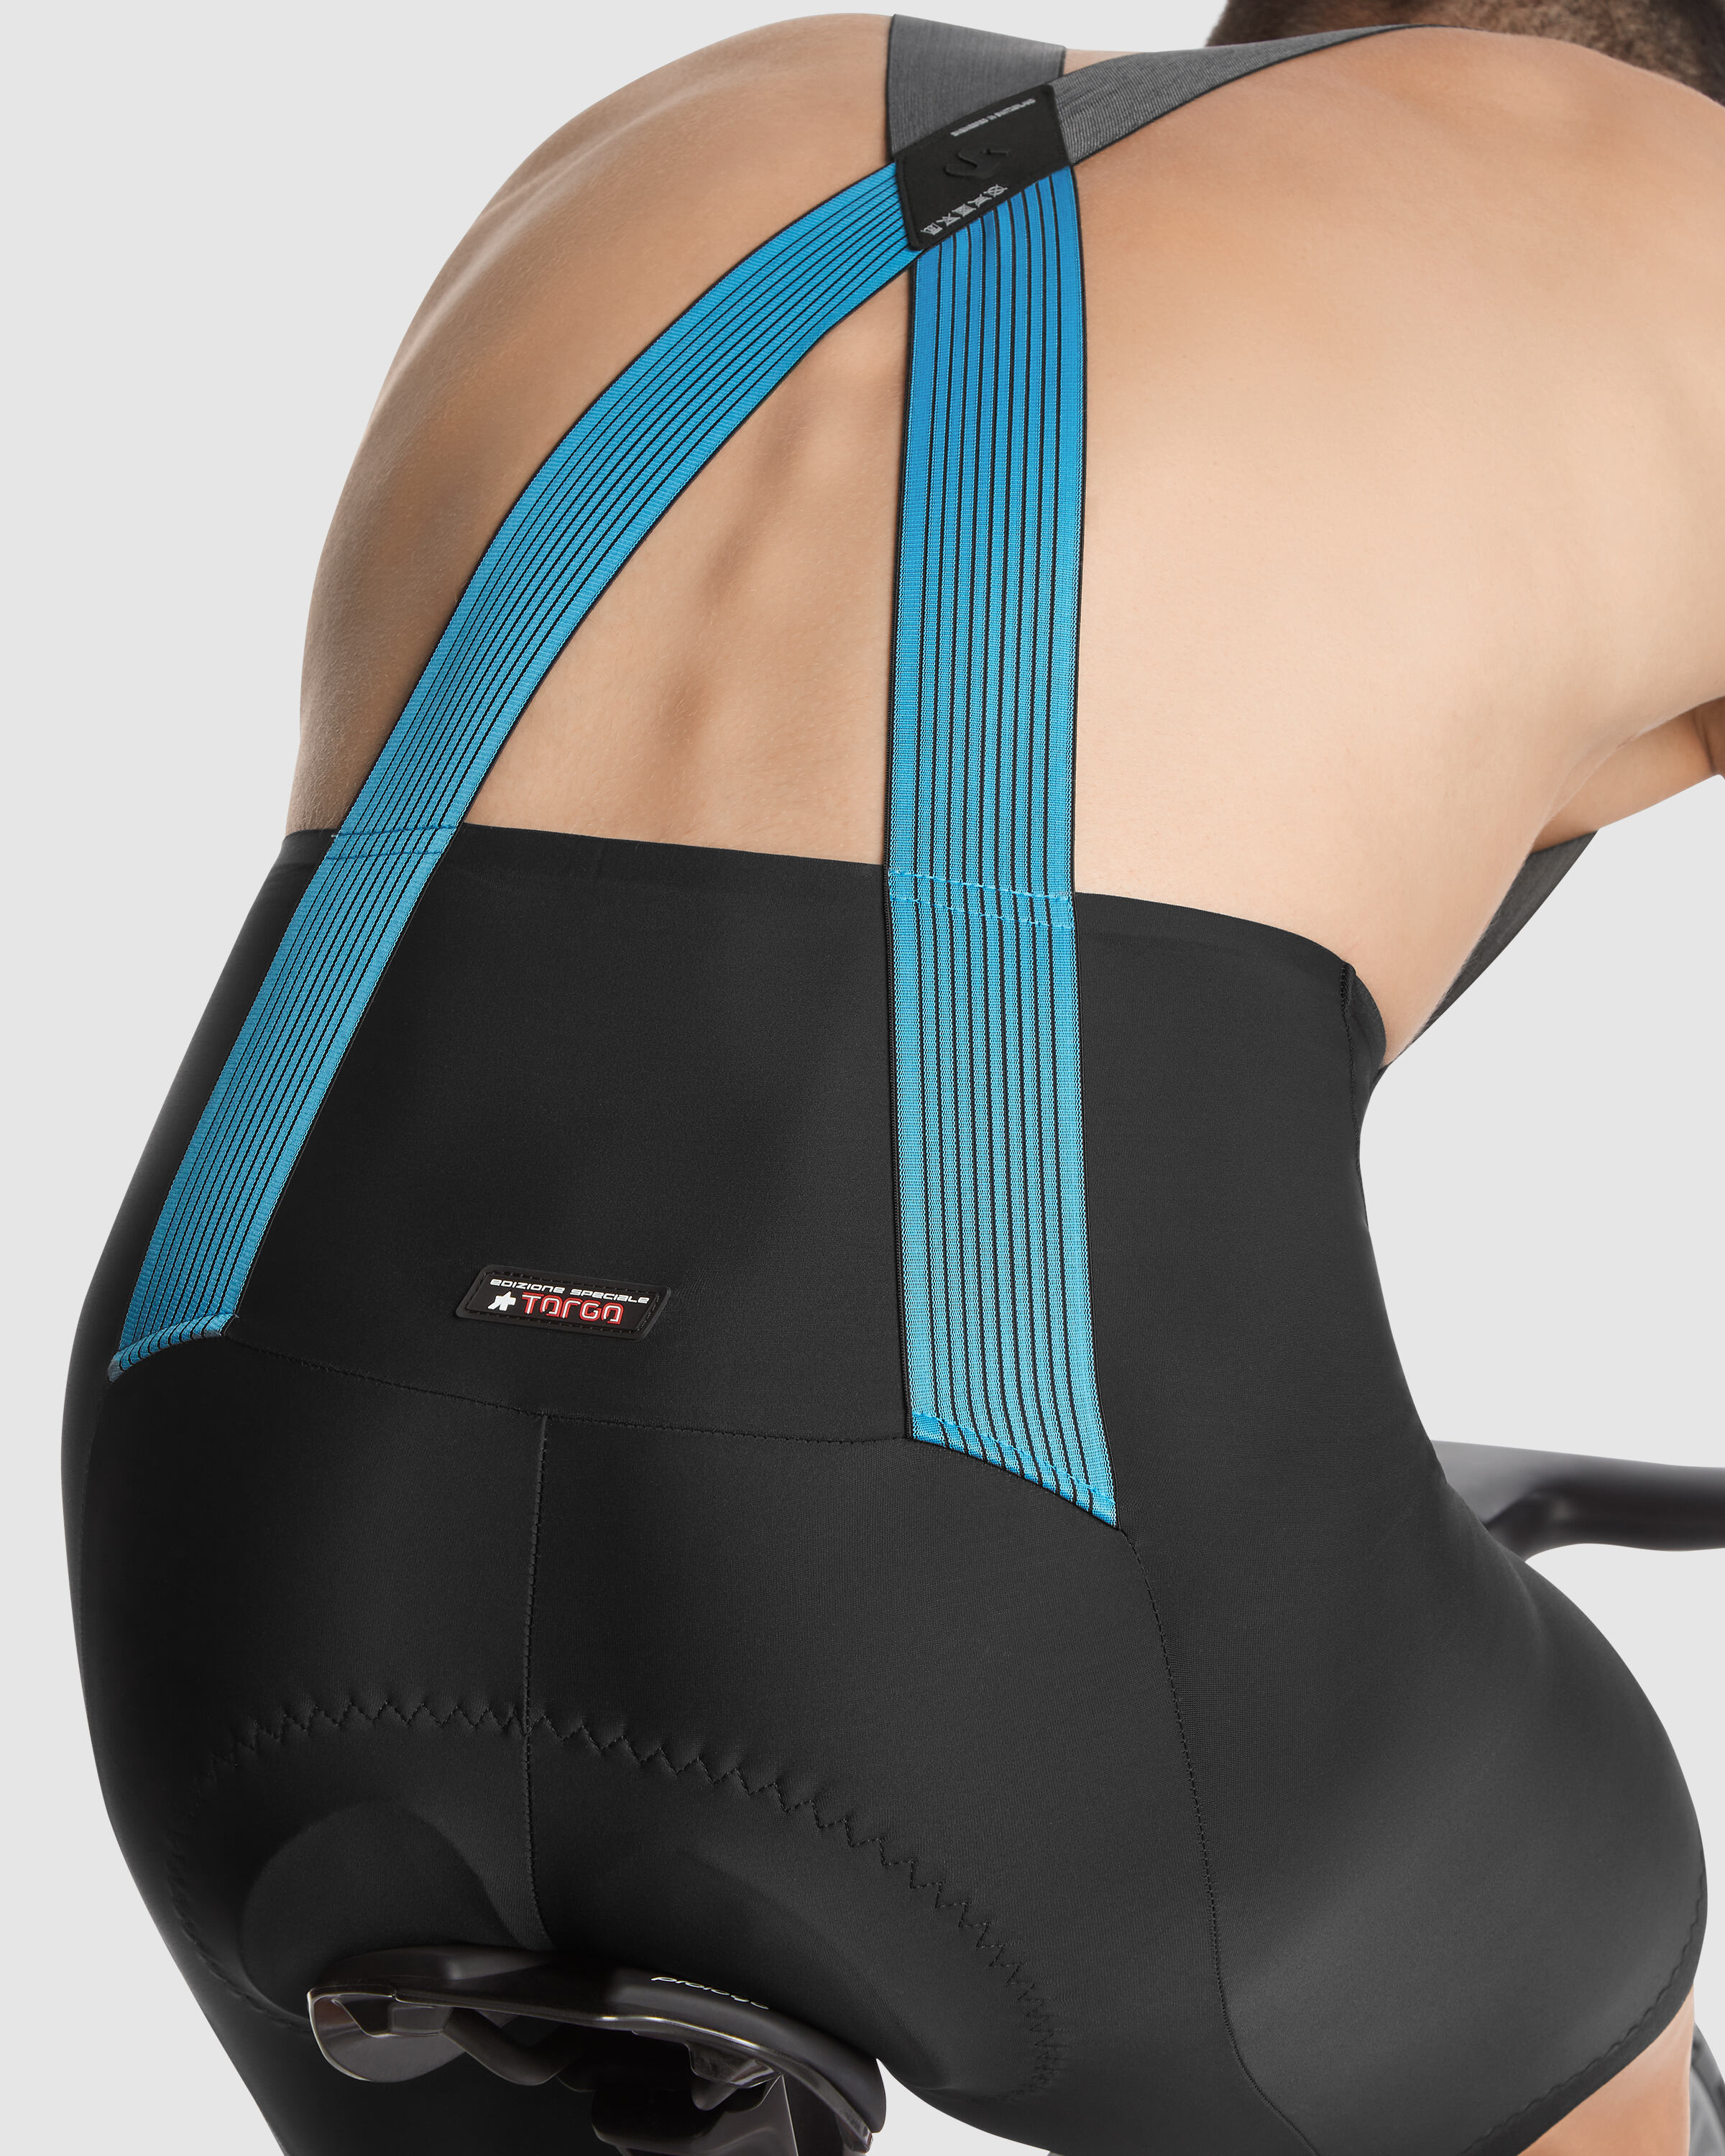 EQUIPE RS Bib Shorts S9 TARGA - ASSOS Of Switzerland - Official Outlet